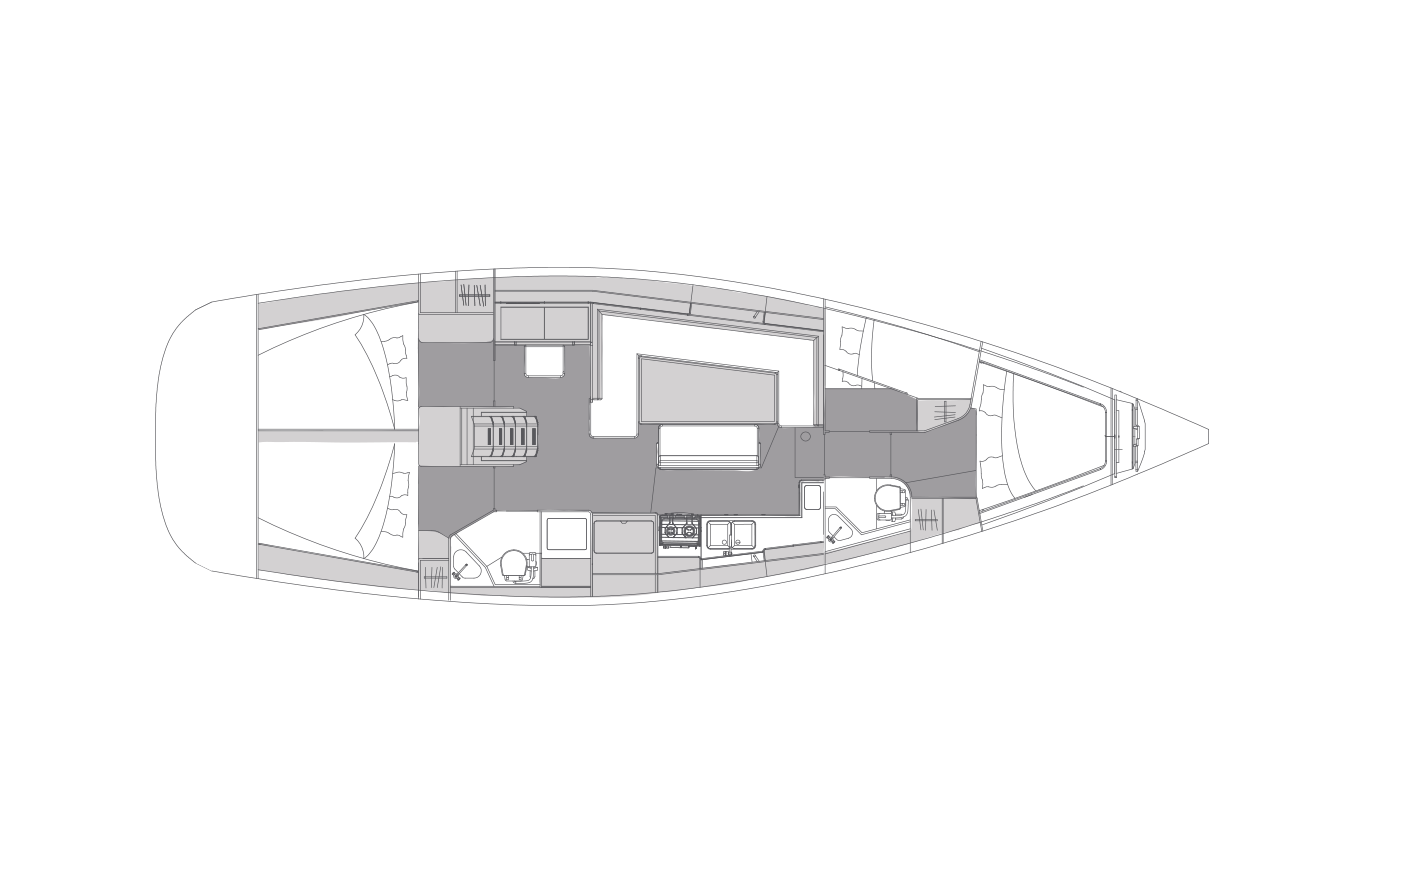 Yachtcharter layout i45 1 a